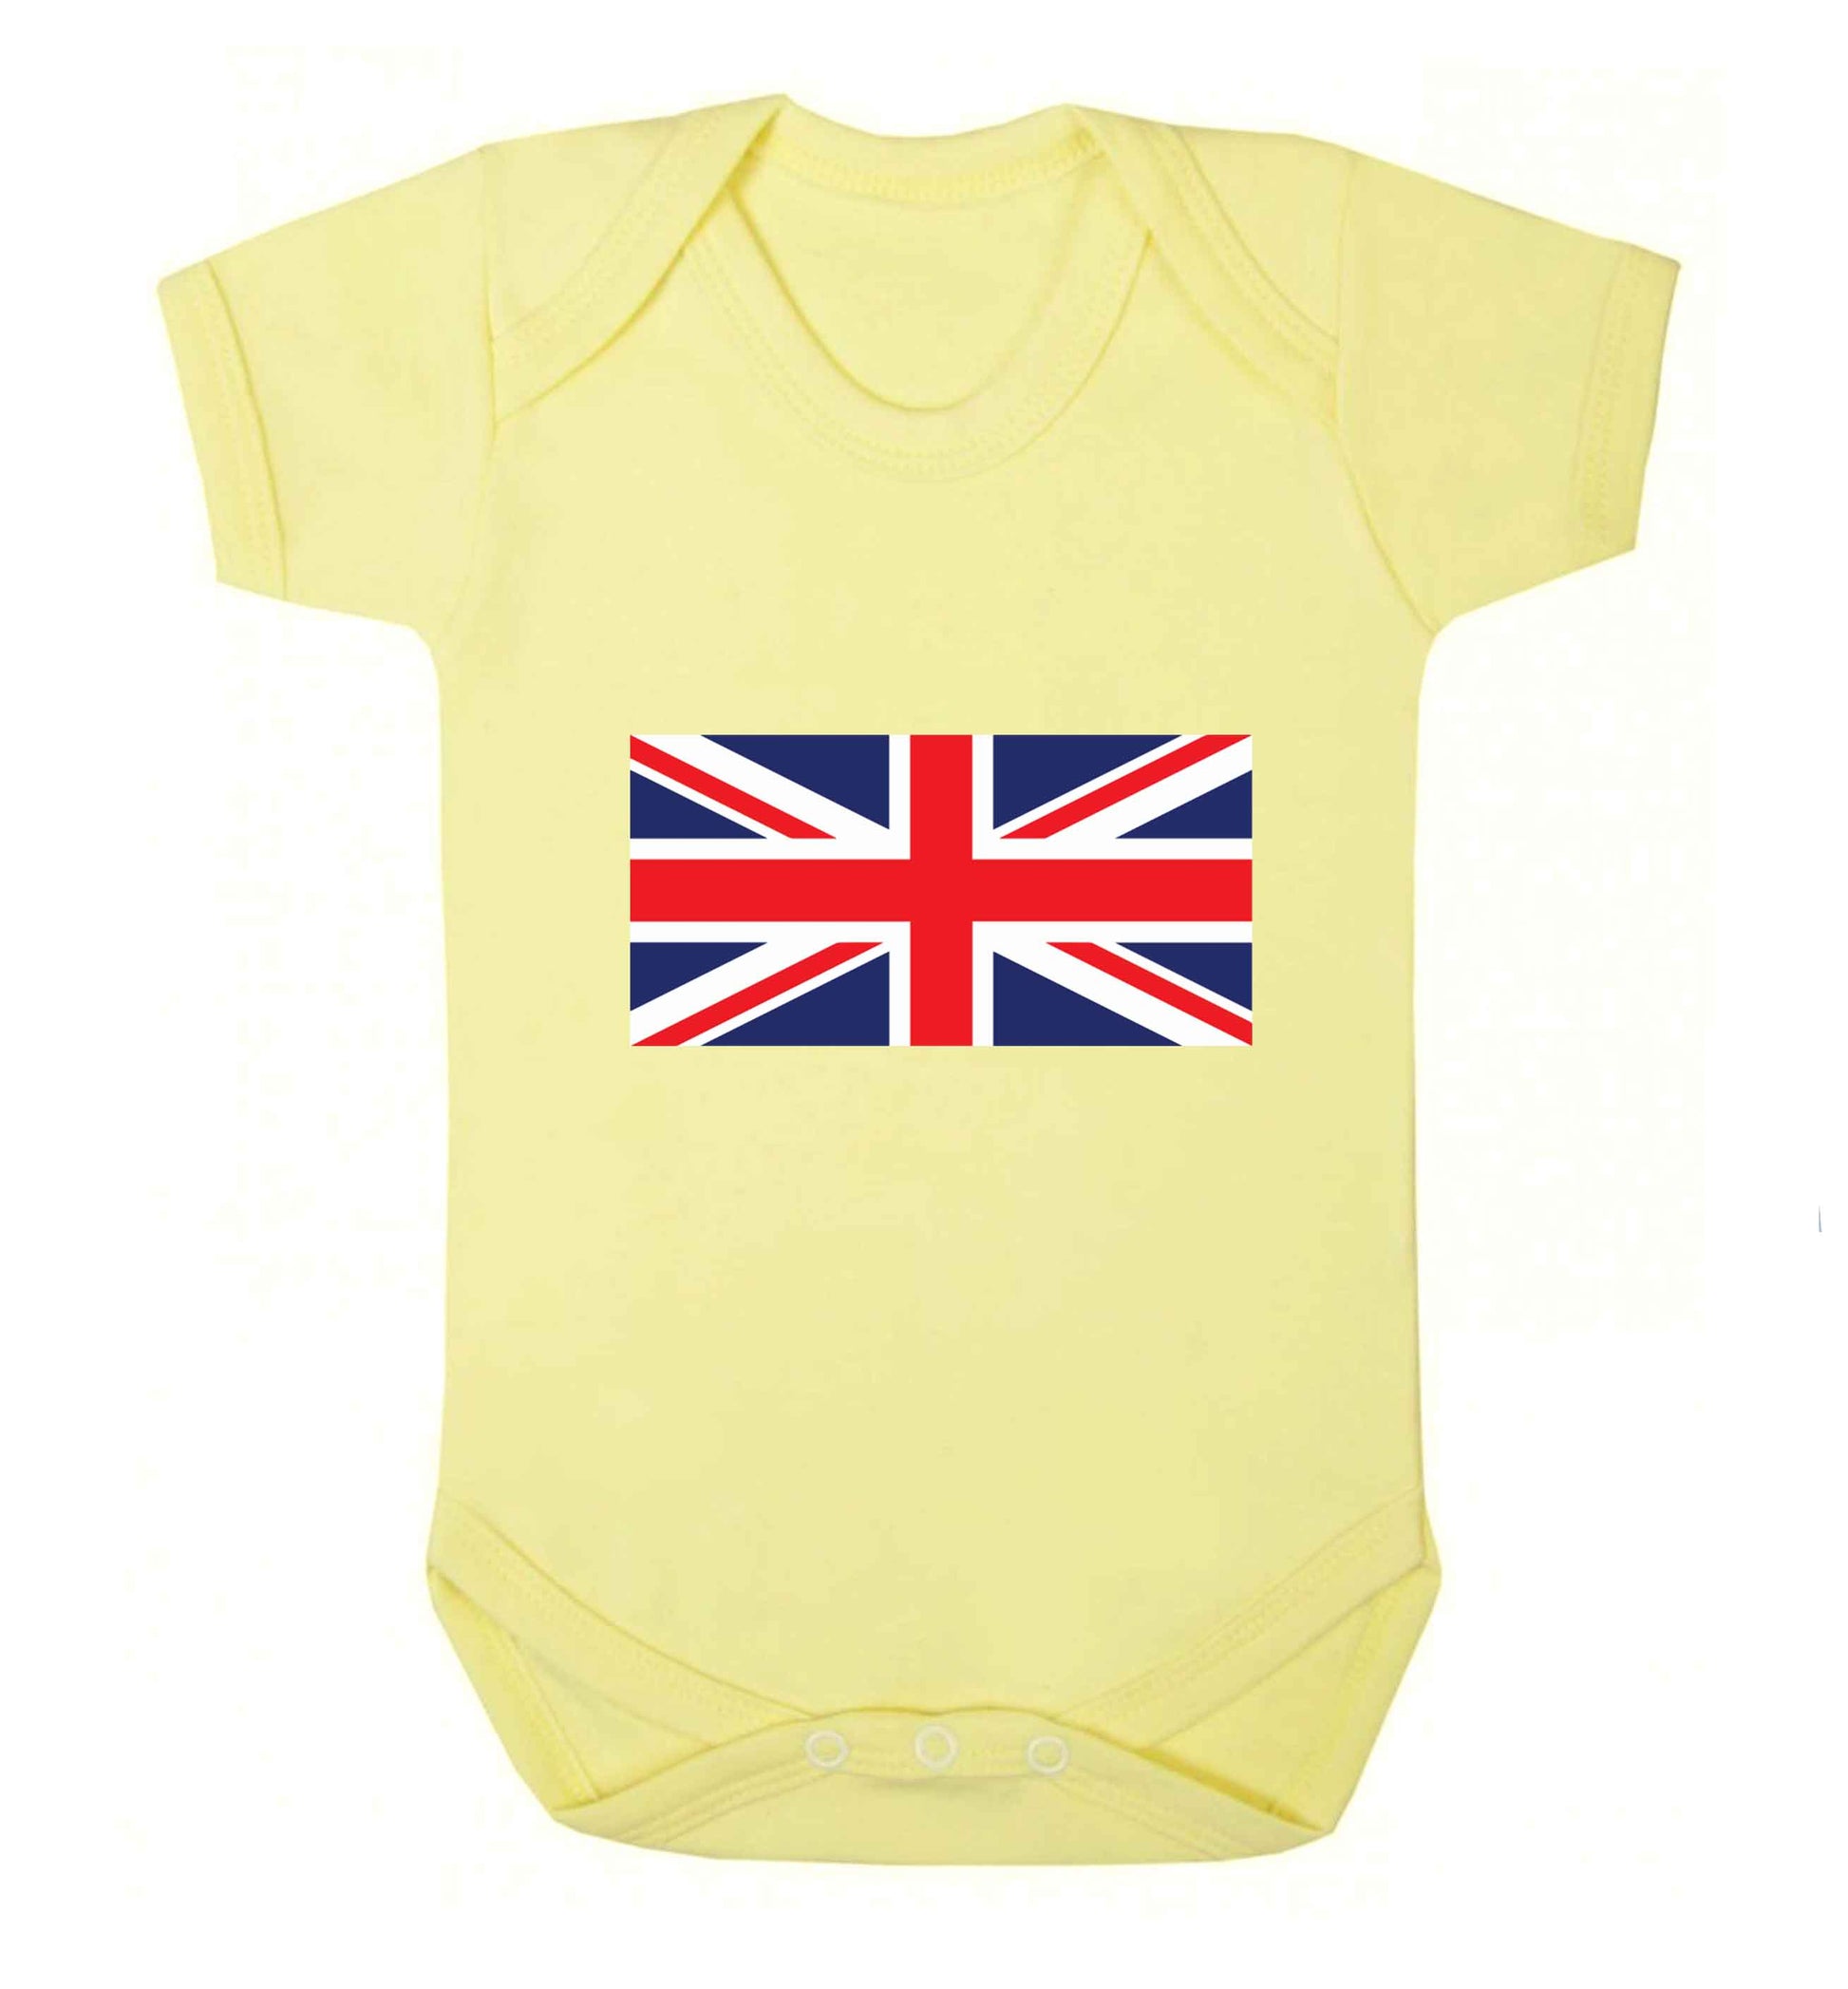 Union Jack baby vest pale yellow 18-24 months